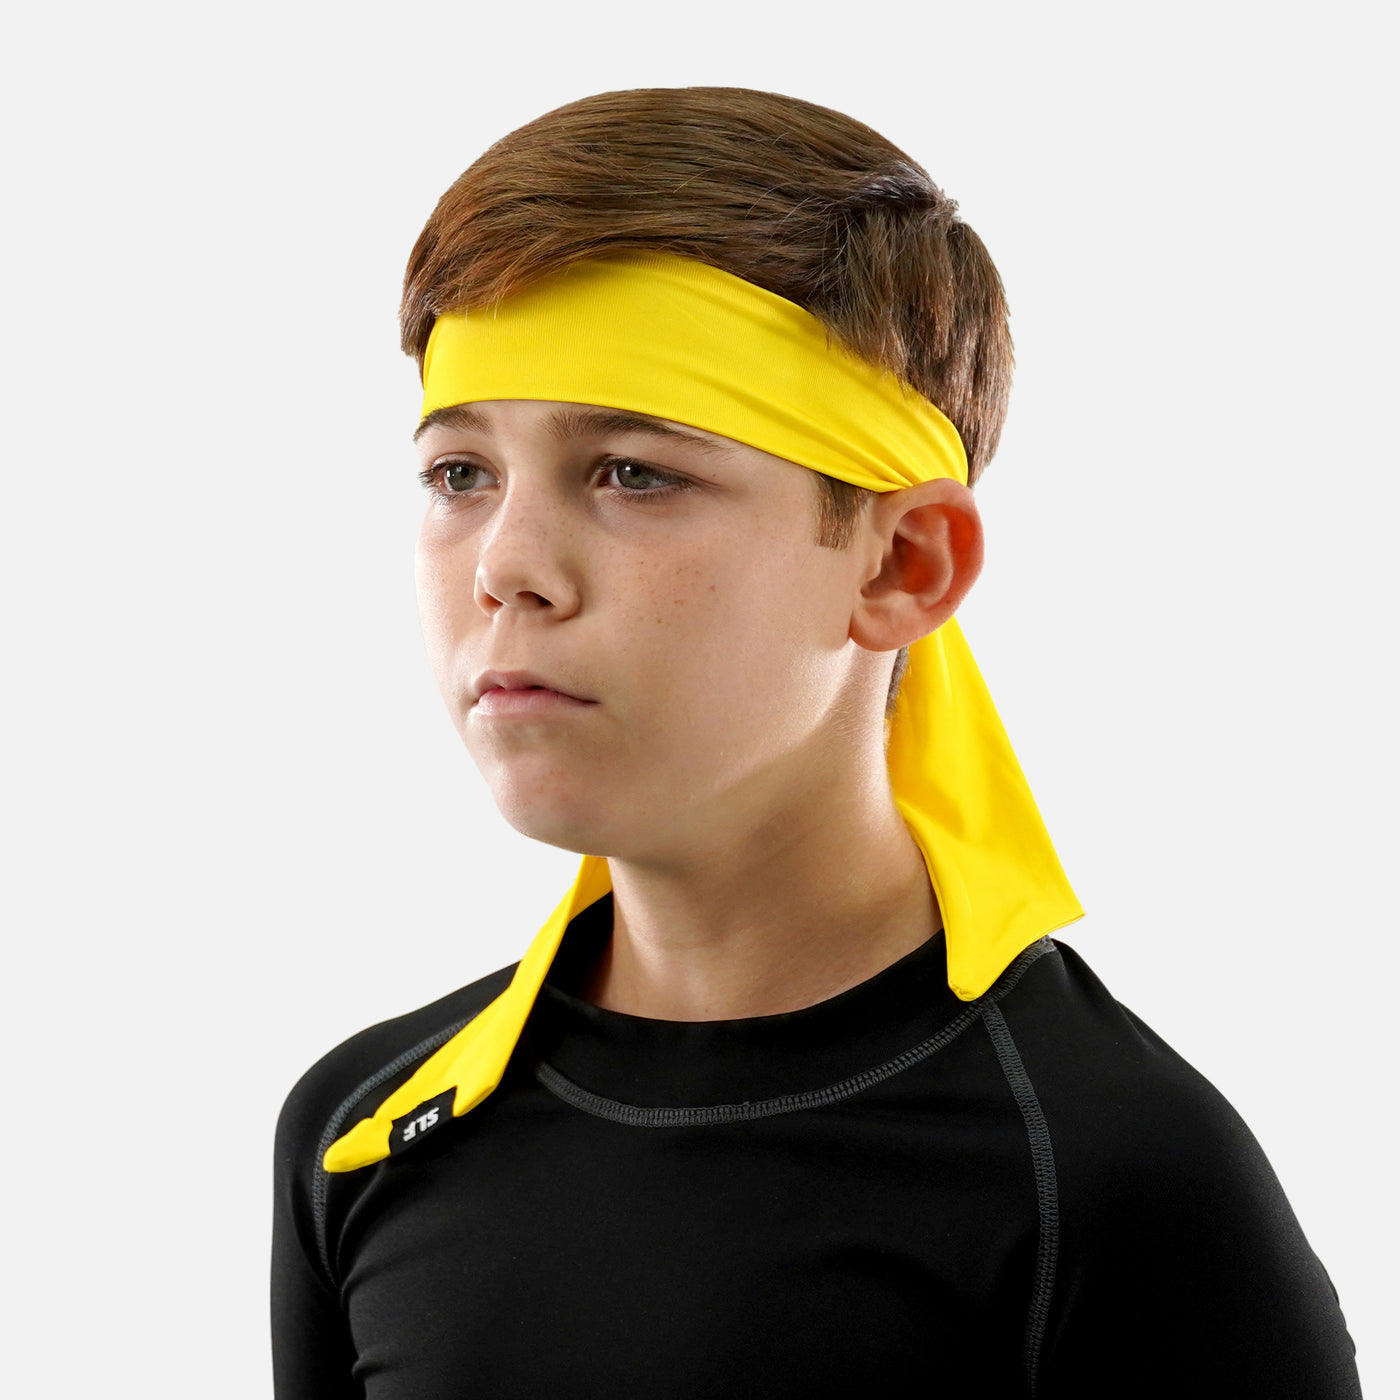 Hue Yellow Kids Ninja Headband